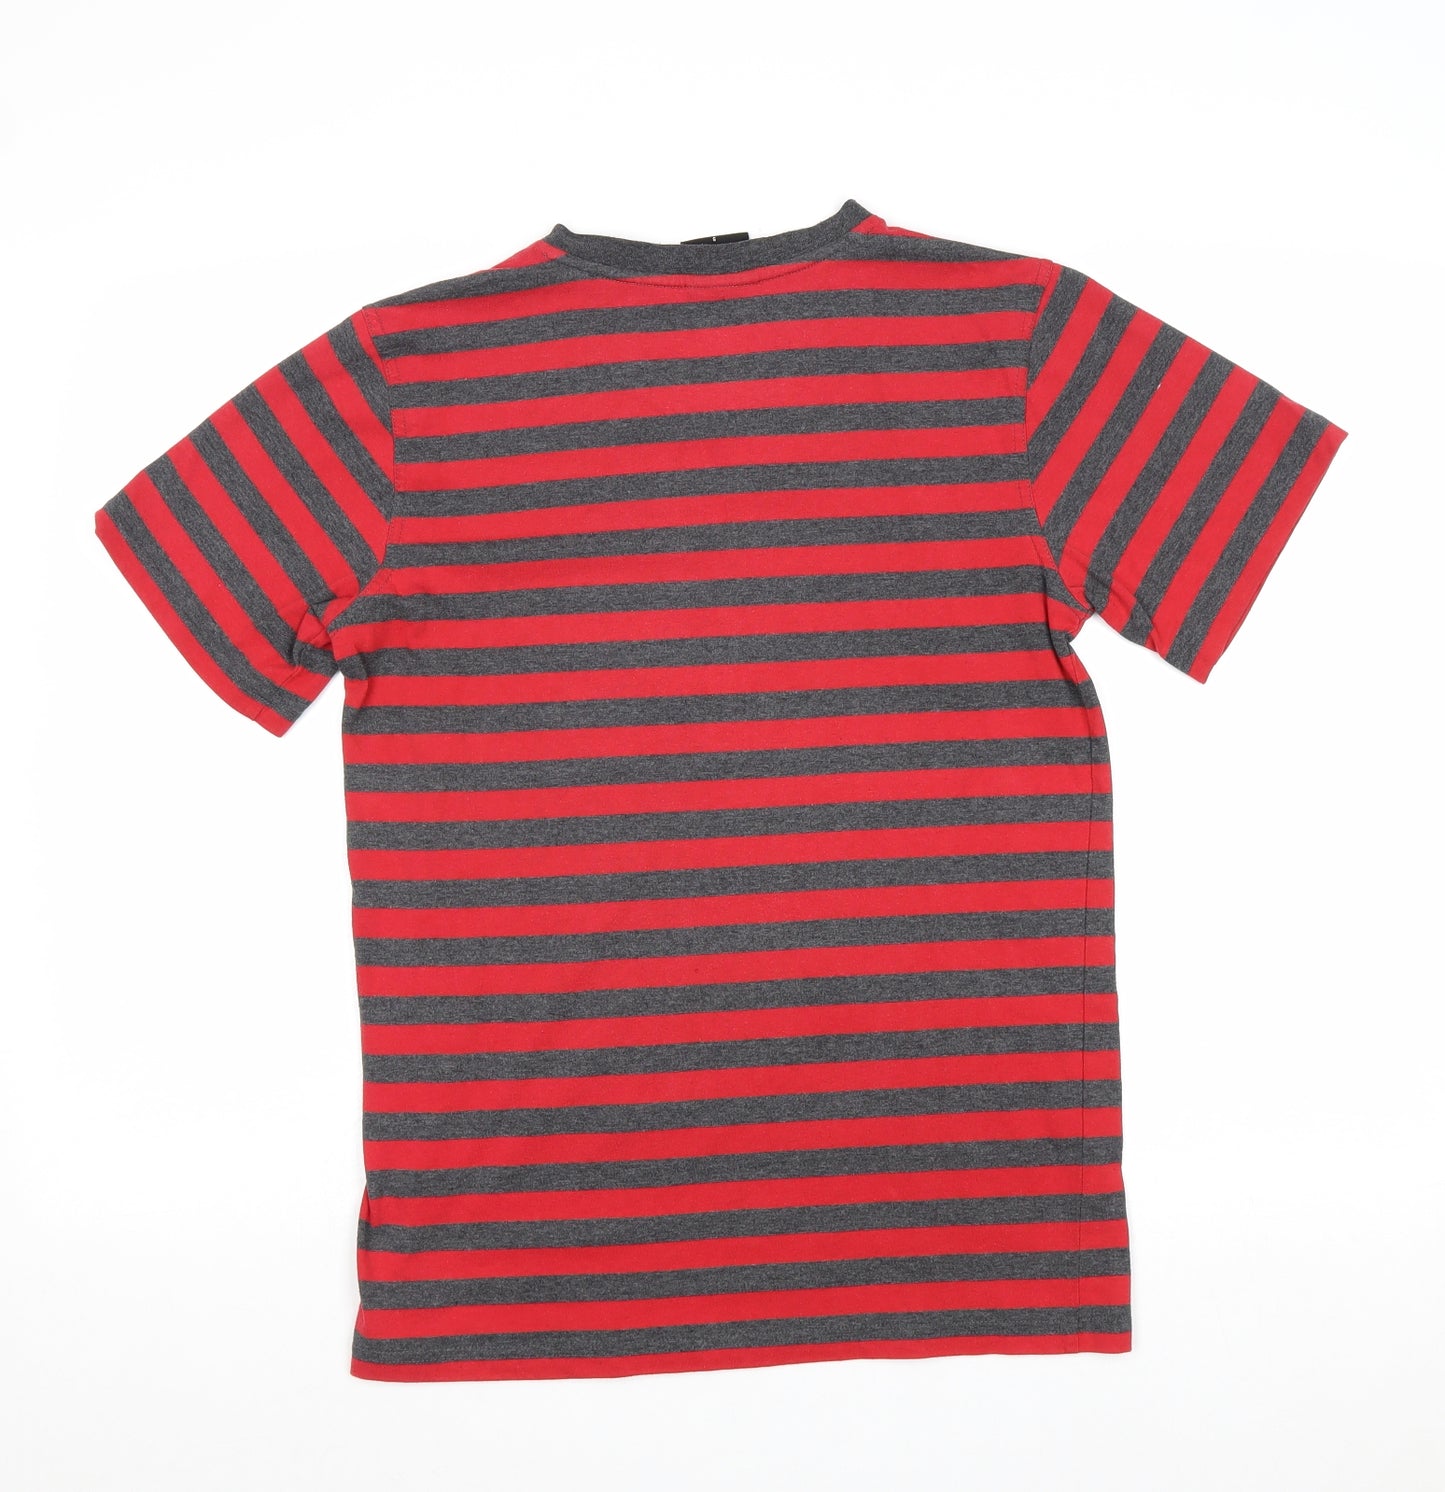 Vago Mens Red Striped Cotton T-Shirt Size S V-Neck